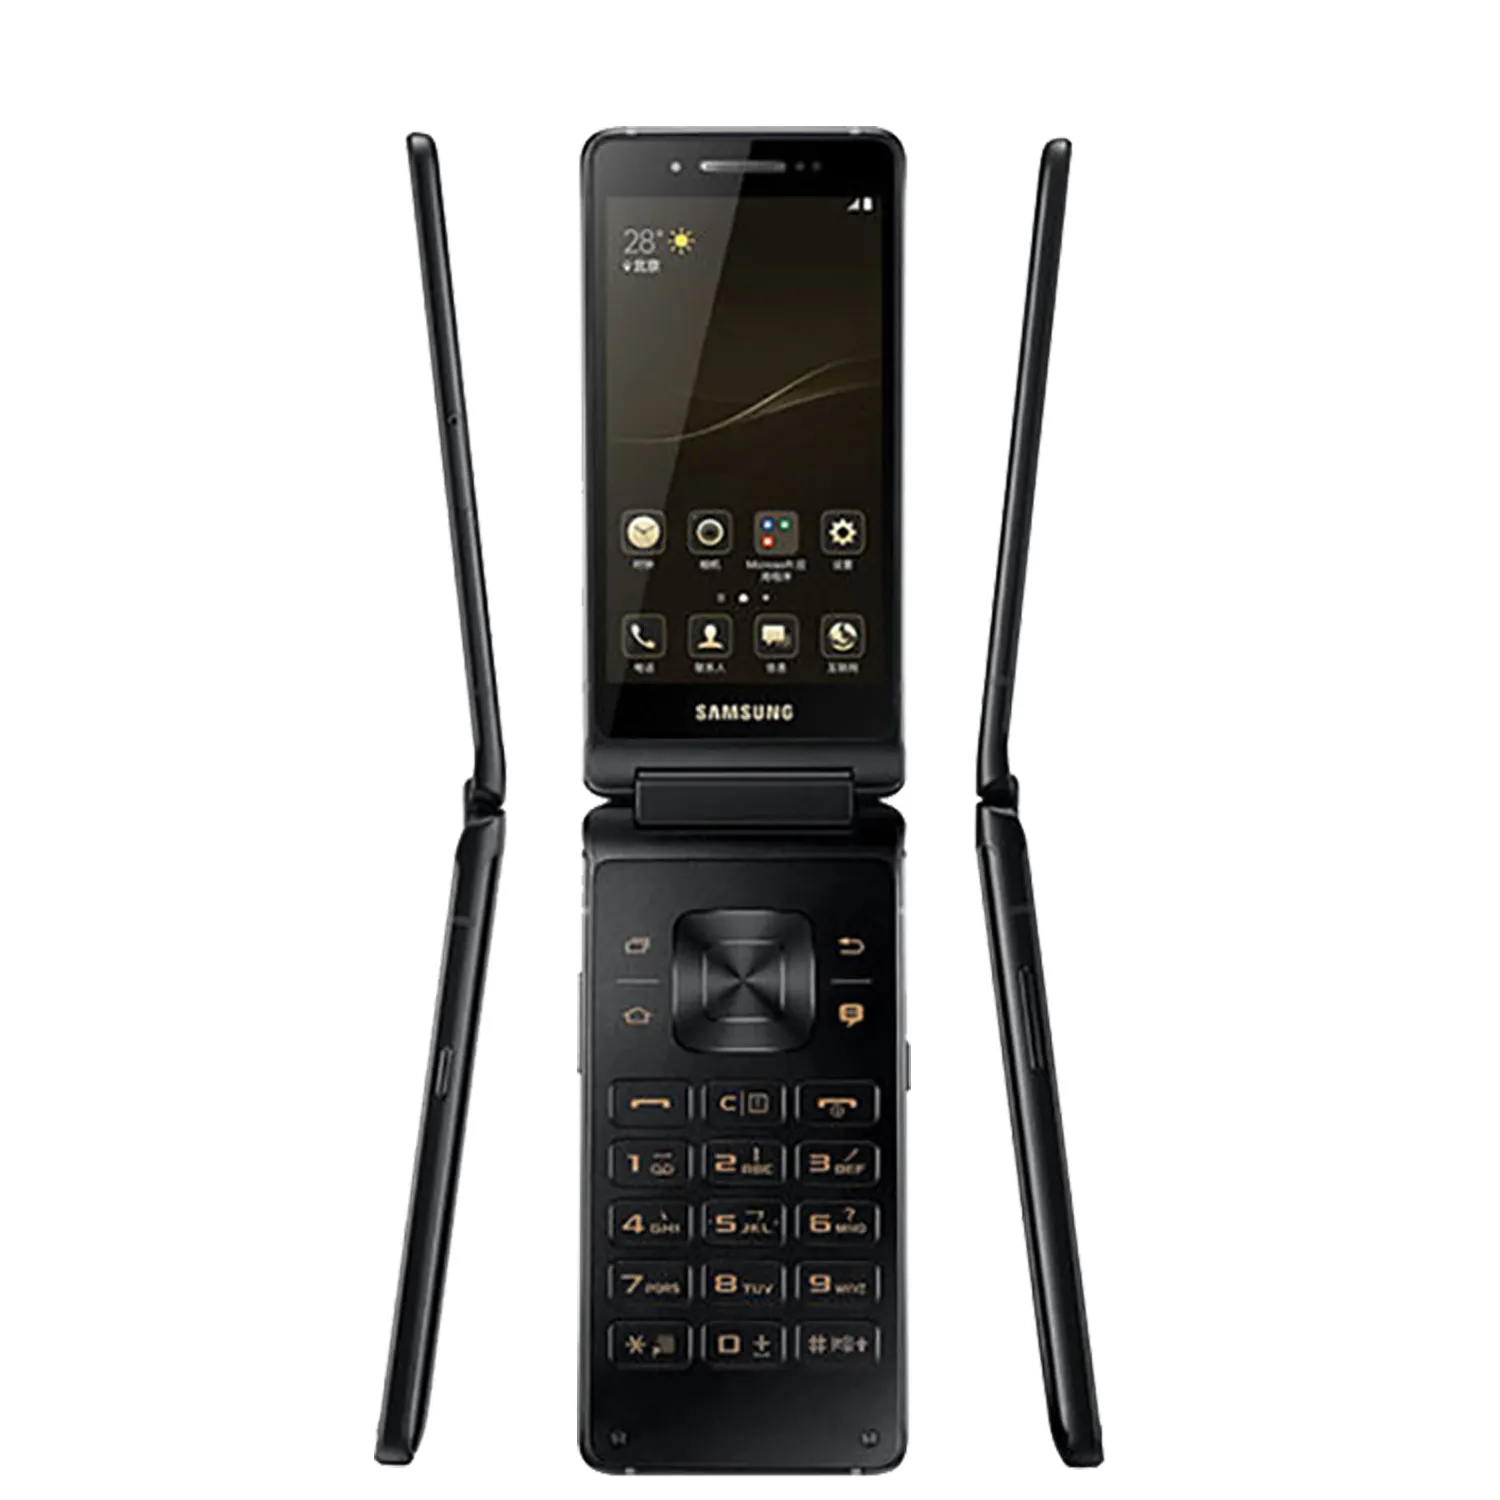 هاتف سامسونج ليدر 8 G9298 4G LTE شاشة AMOLED 4.2 بوصة هاتف ذكي بمعالج سنابدراجون 821 رباعي النواة هاتف محمول اندرويد قابل للطي